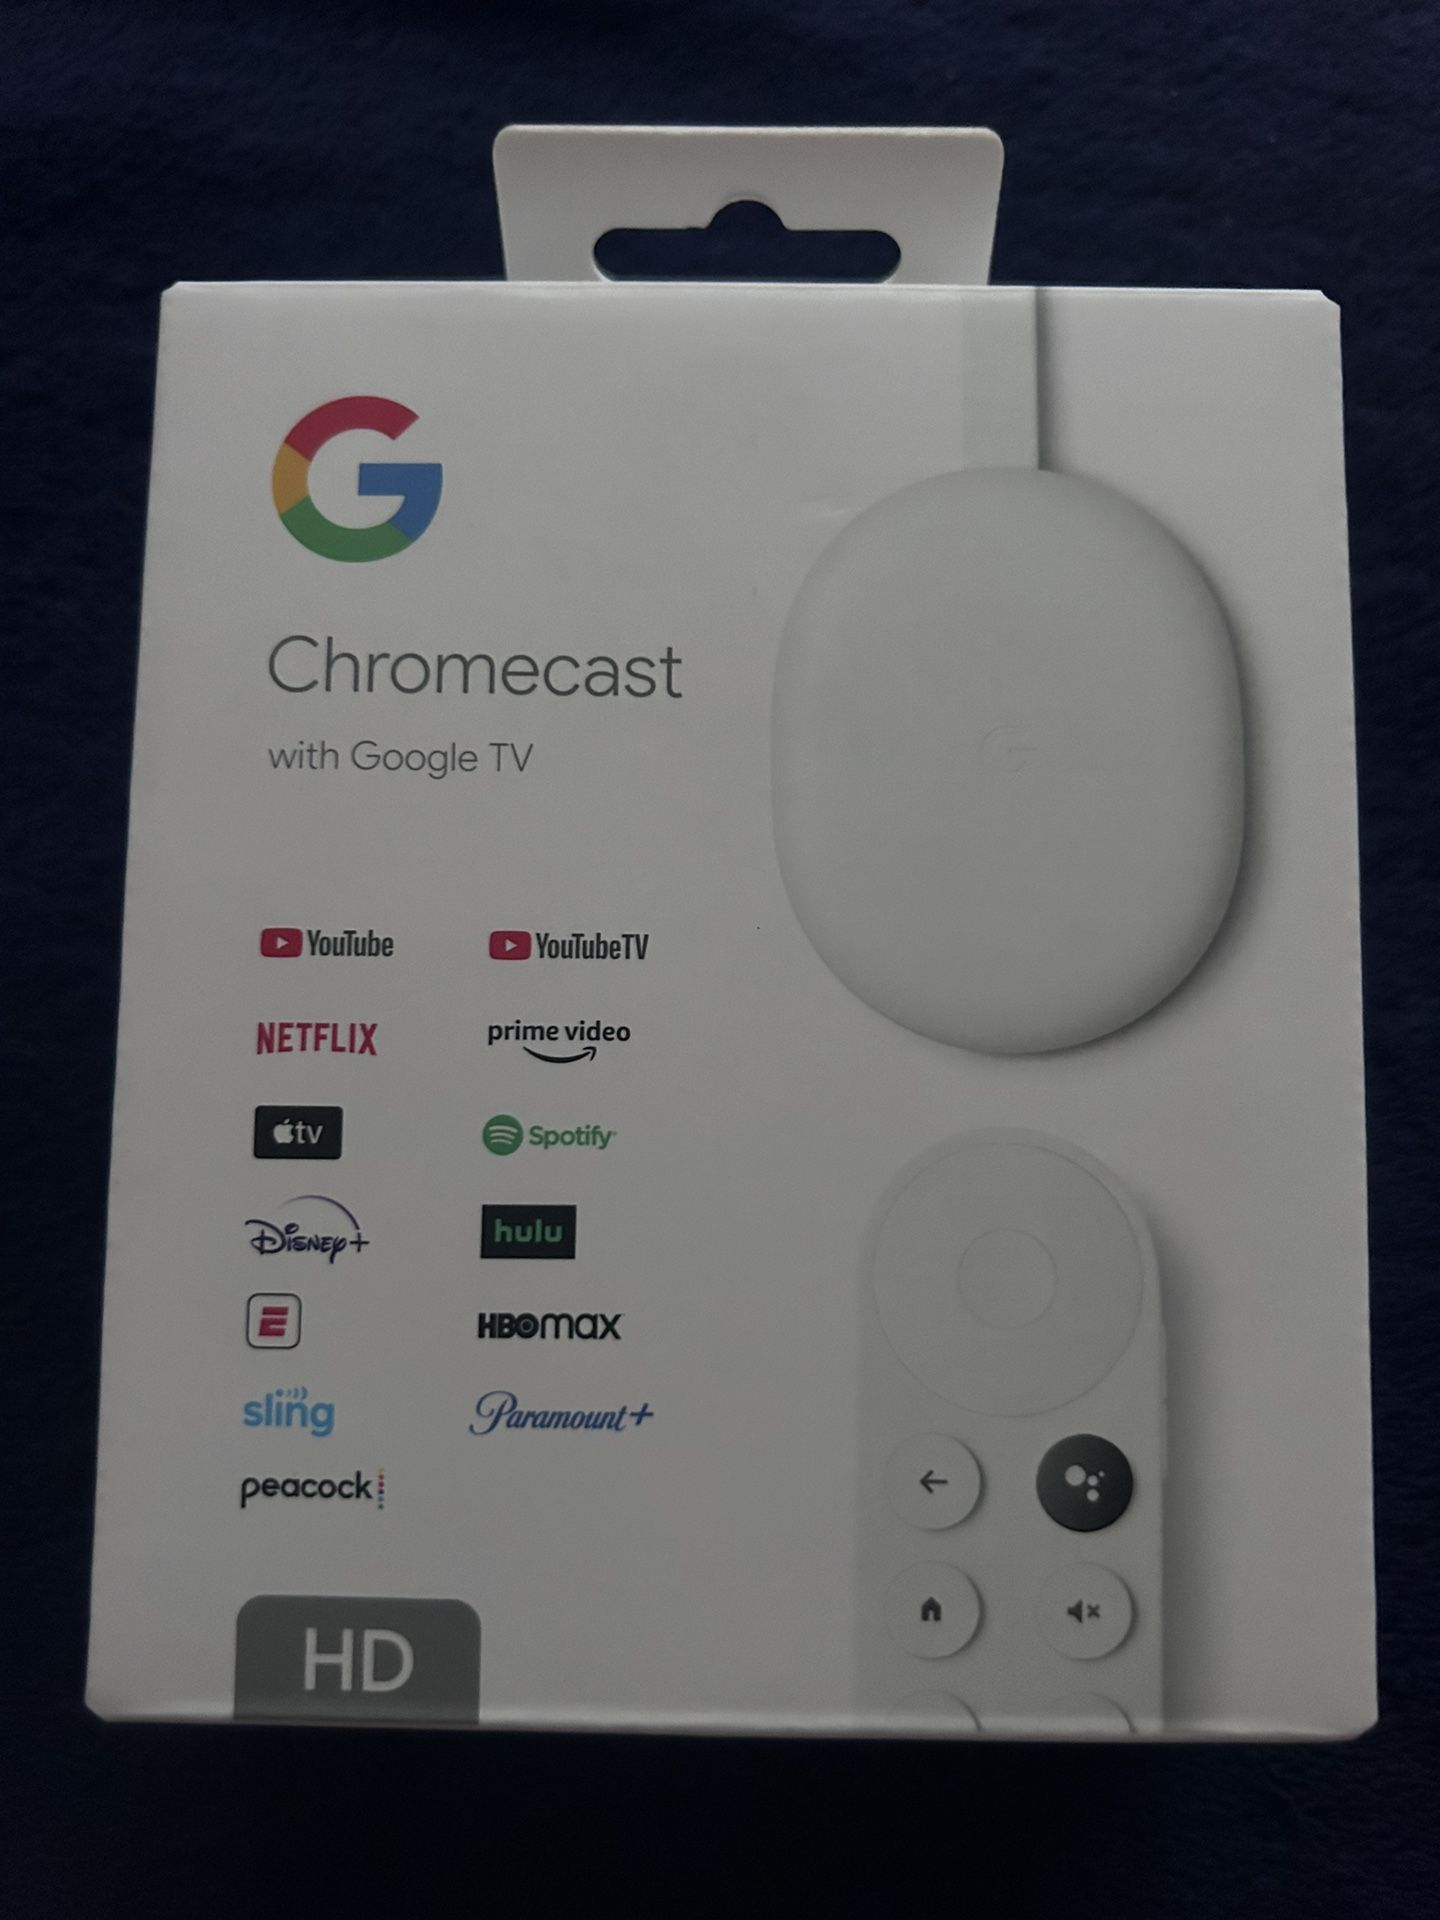 Goggle Chromecast